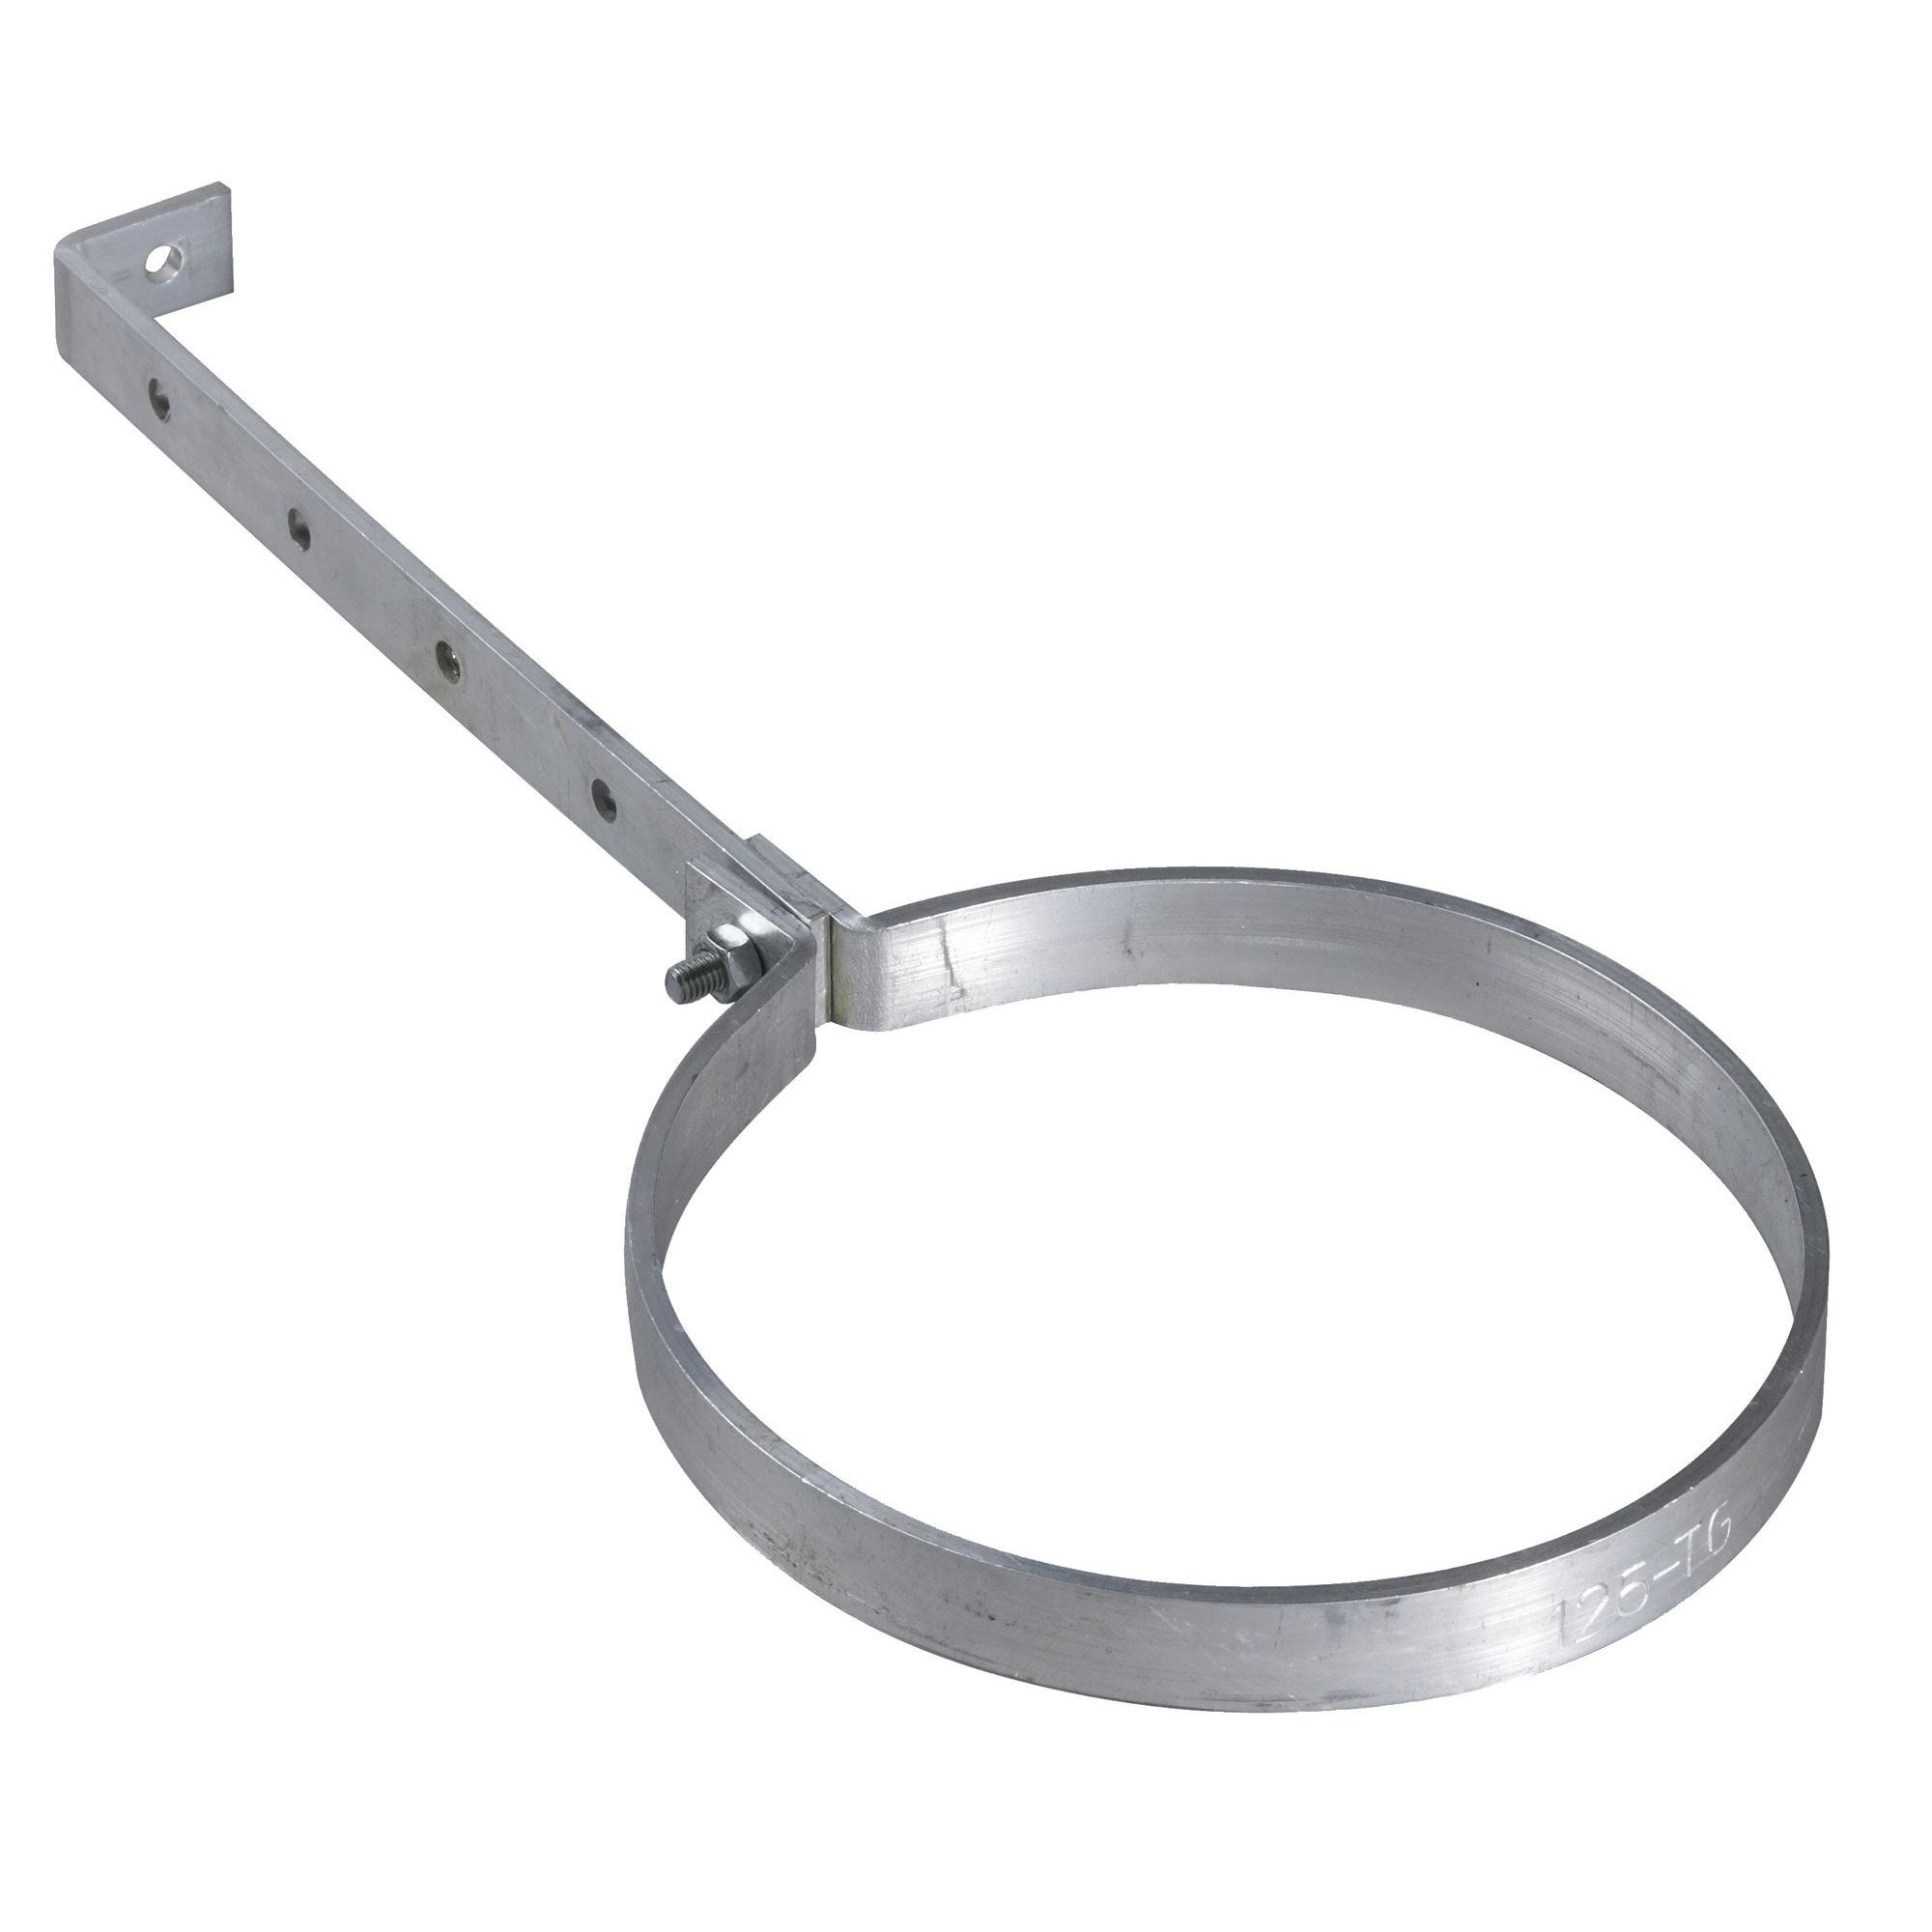 Collier de suspension en aluminium D125 - TOLERIE GENERALE - 125 0